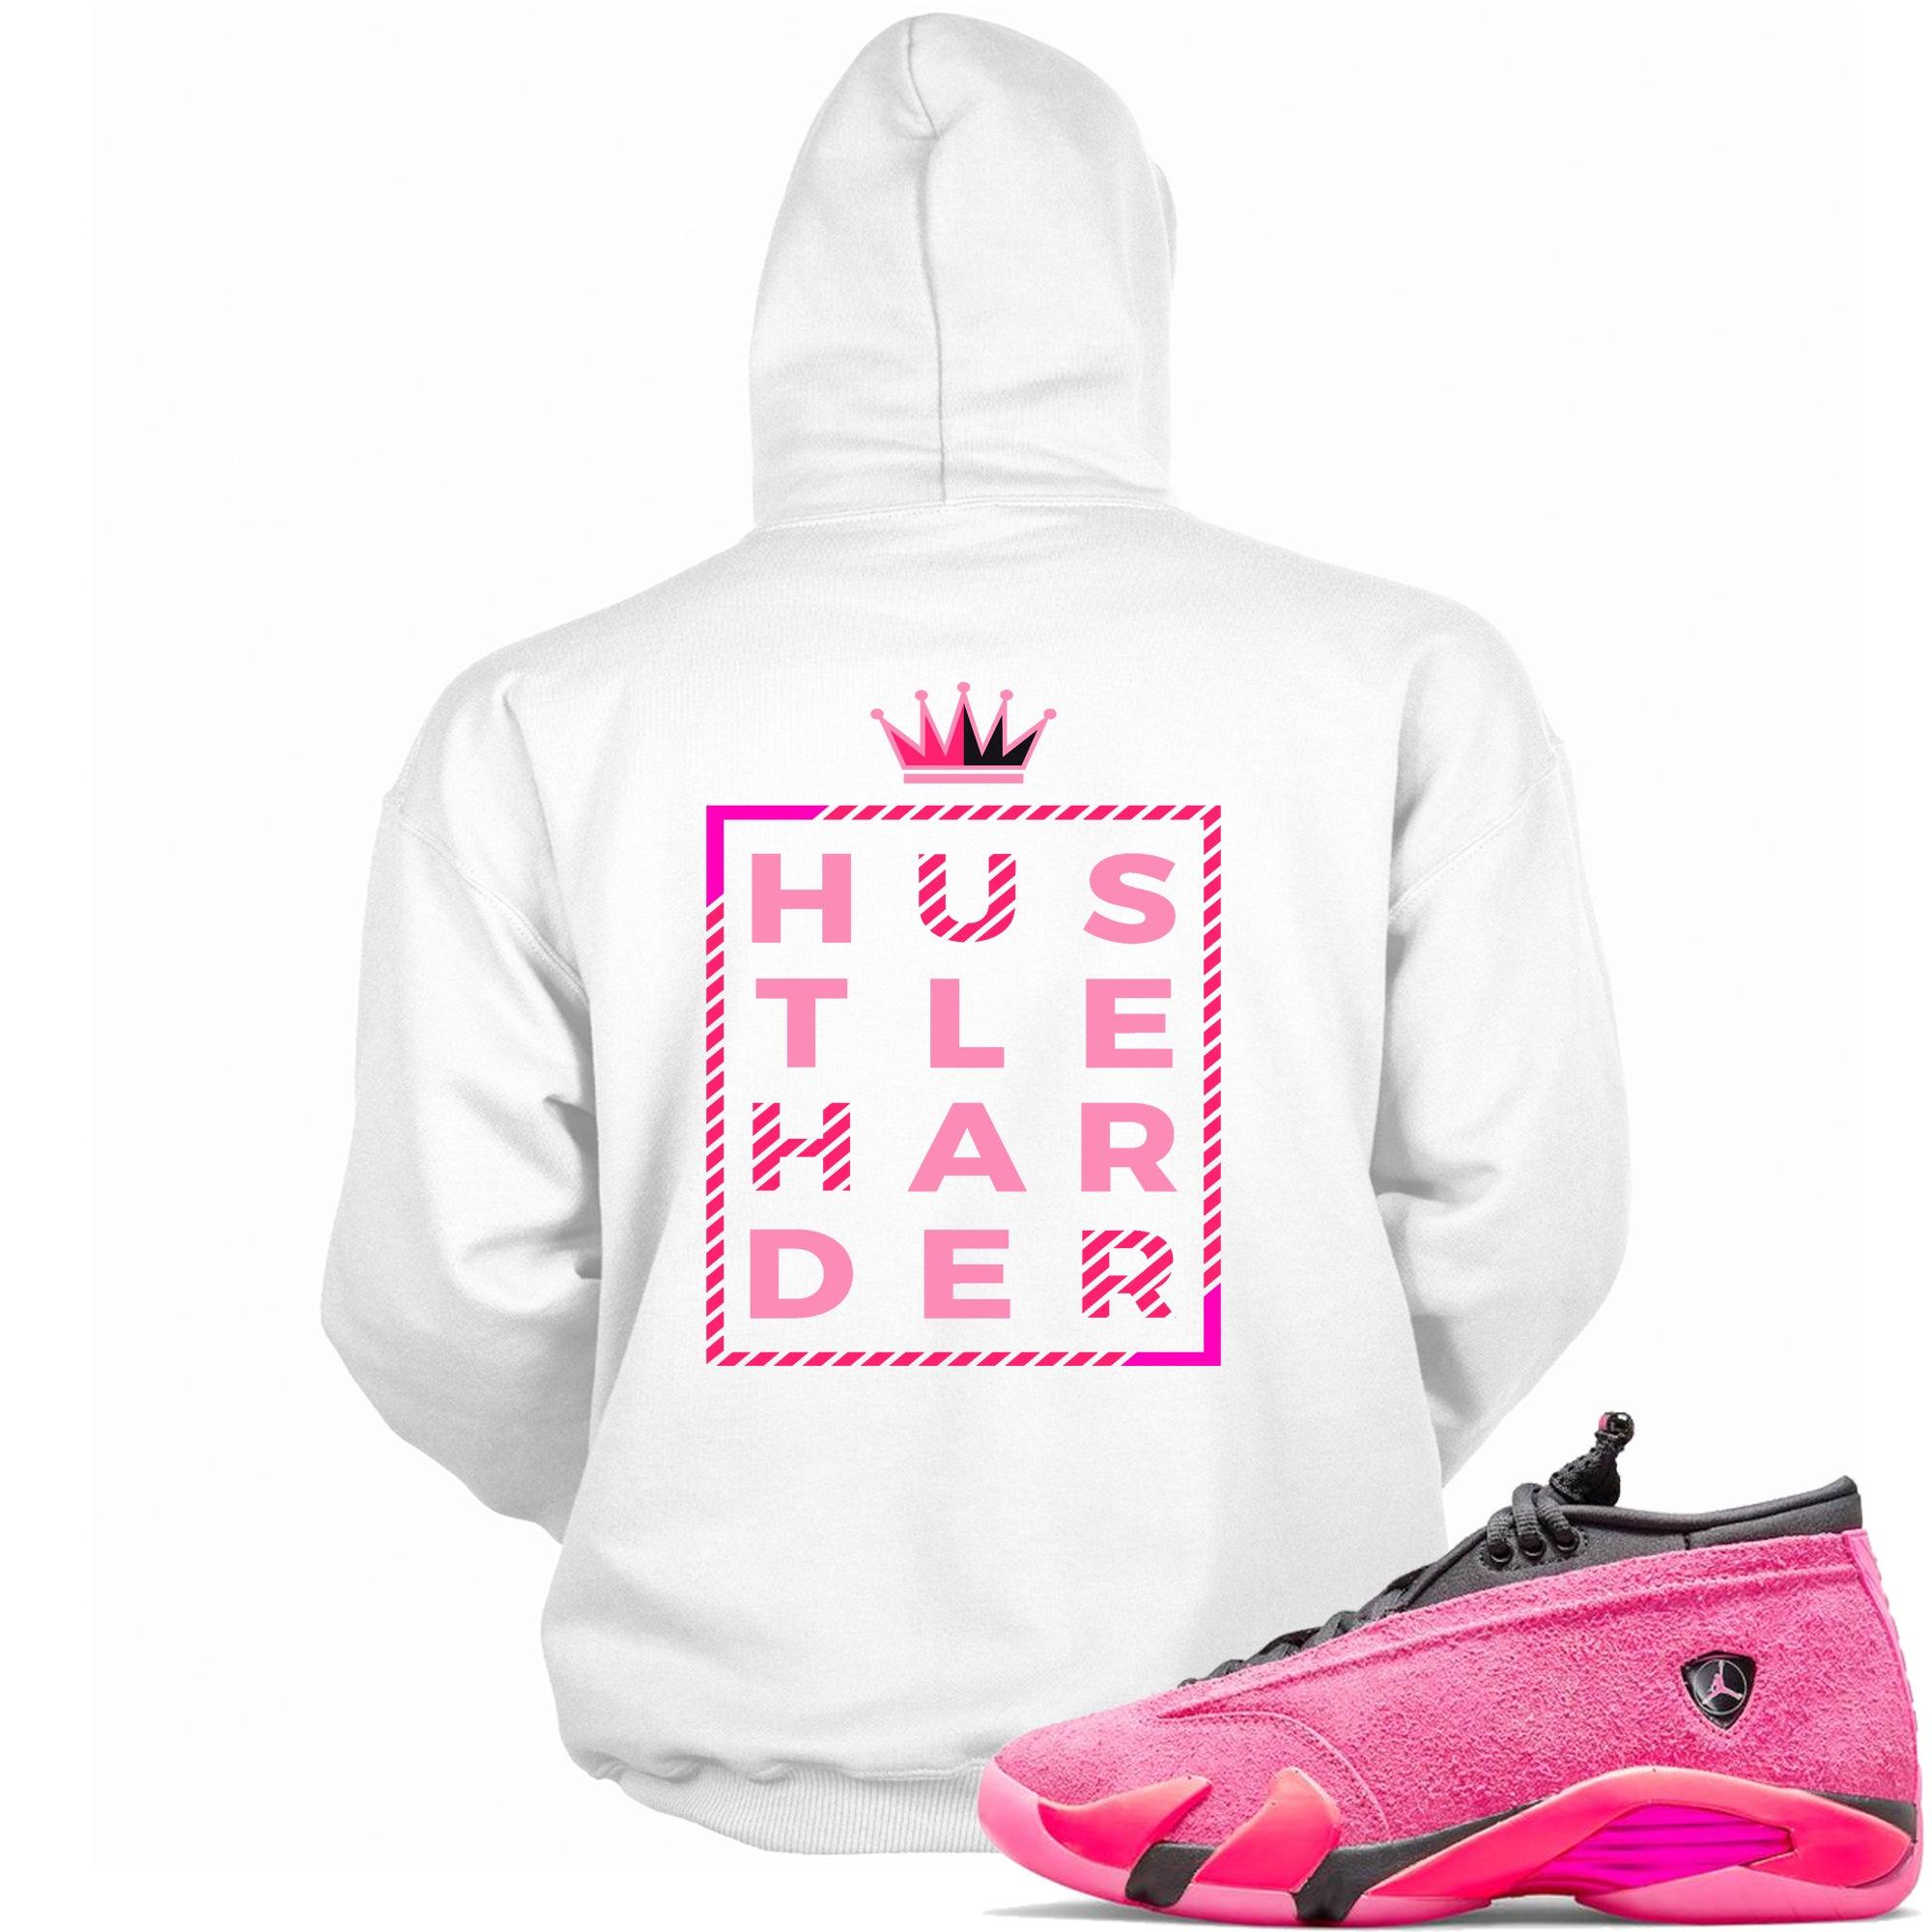 Hustle Harder Hoodie AJ 14s Low Shocking Pink photo